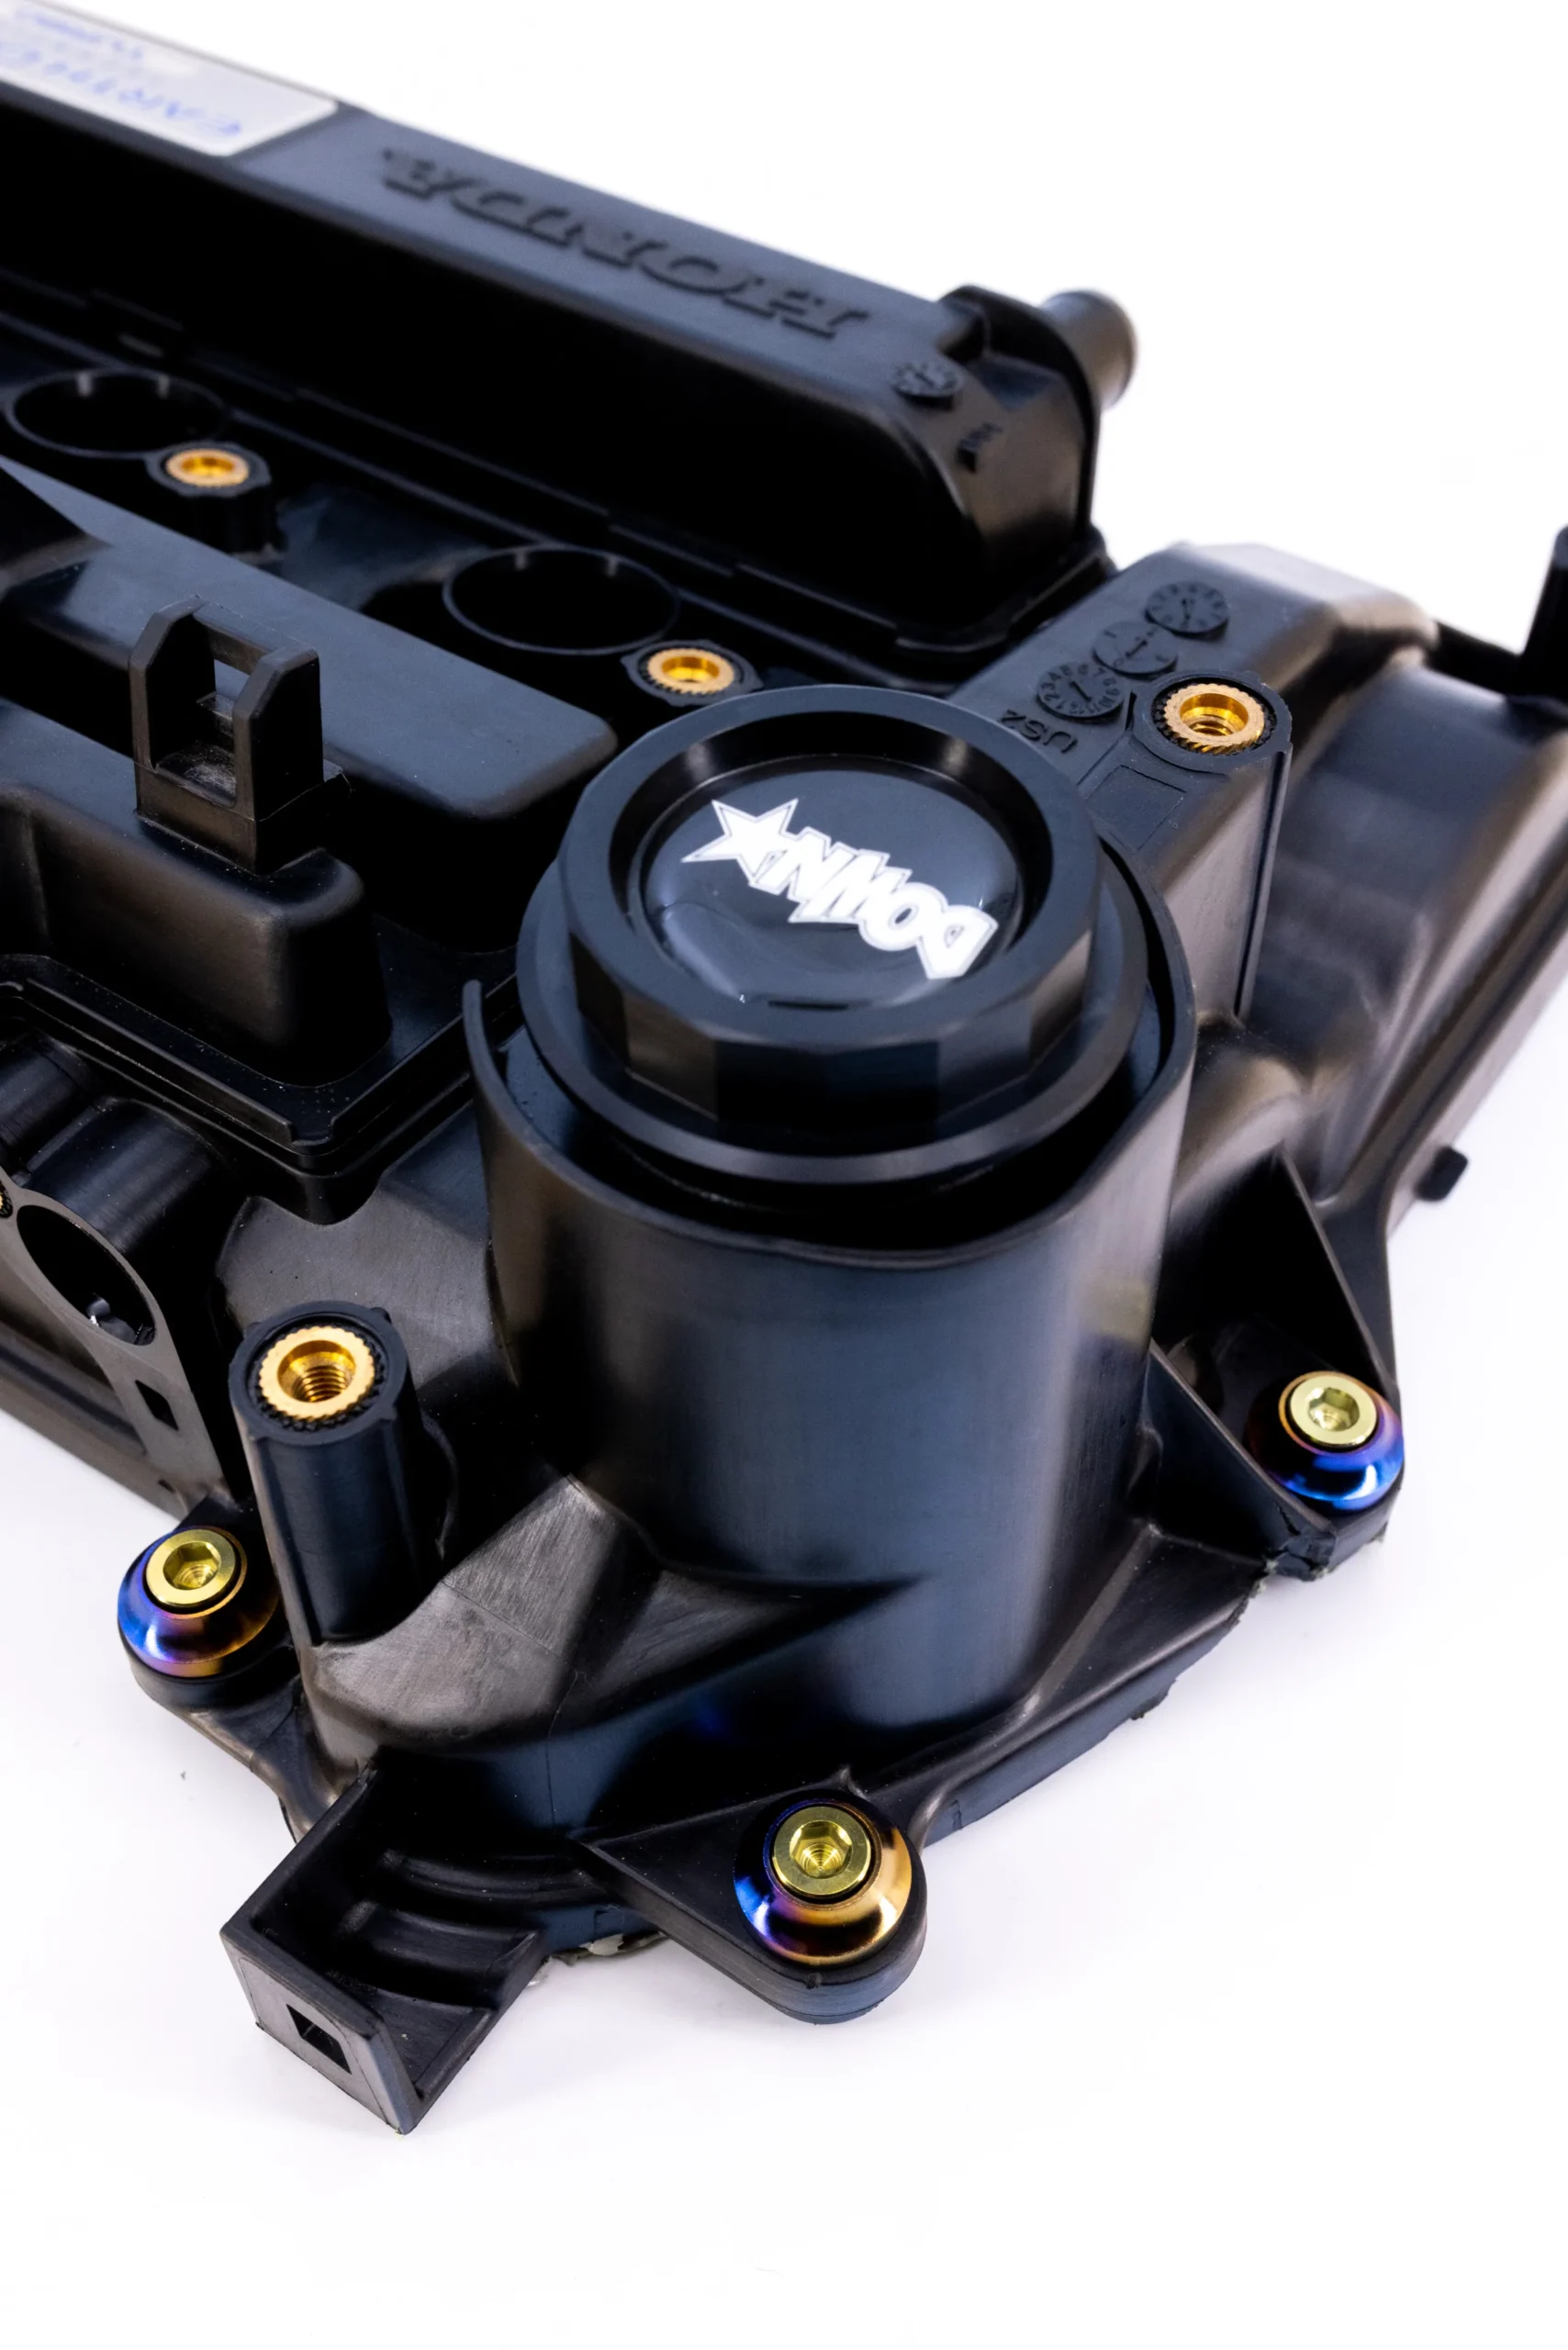 Upgrade Your Honda Engine with Downstar’s GR-5 Titanium L15/K20C Valve Cover Hardware Kit!